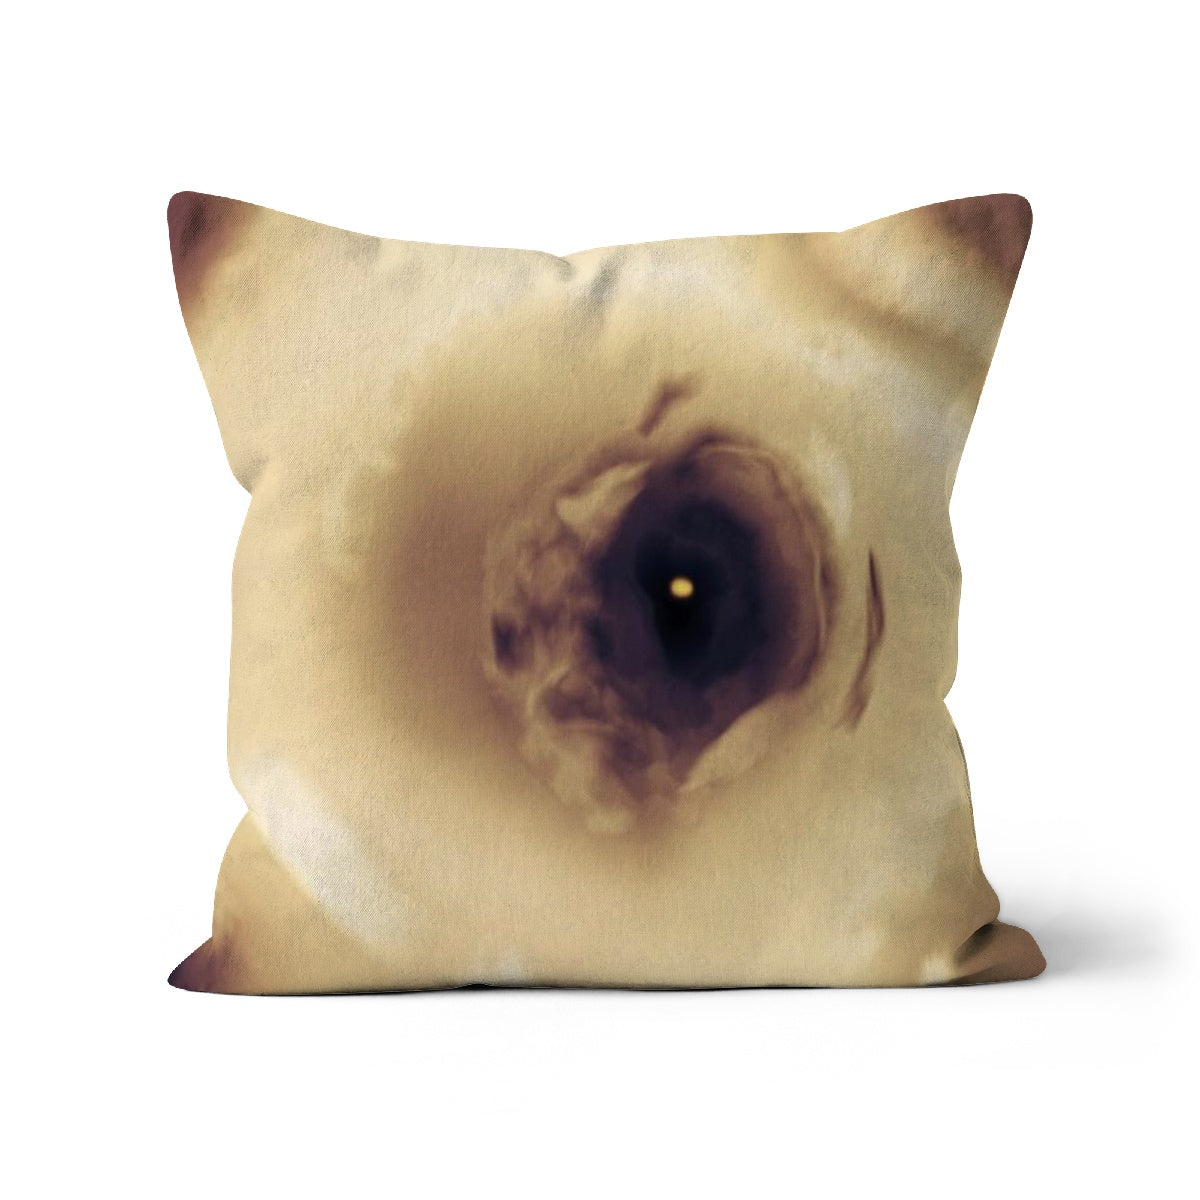 Eye Cushion